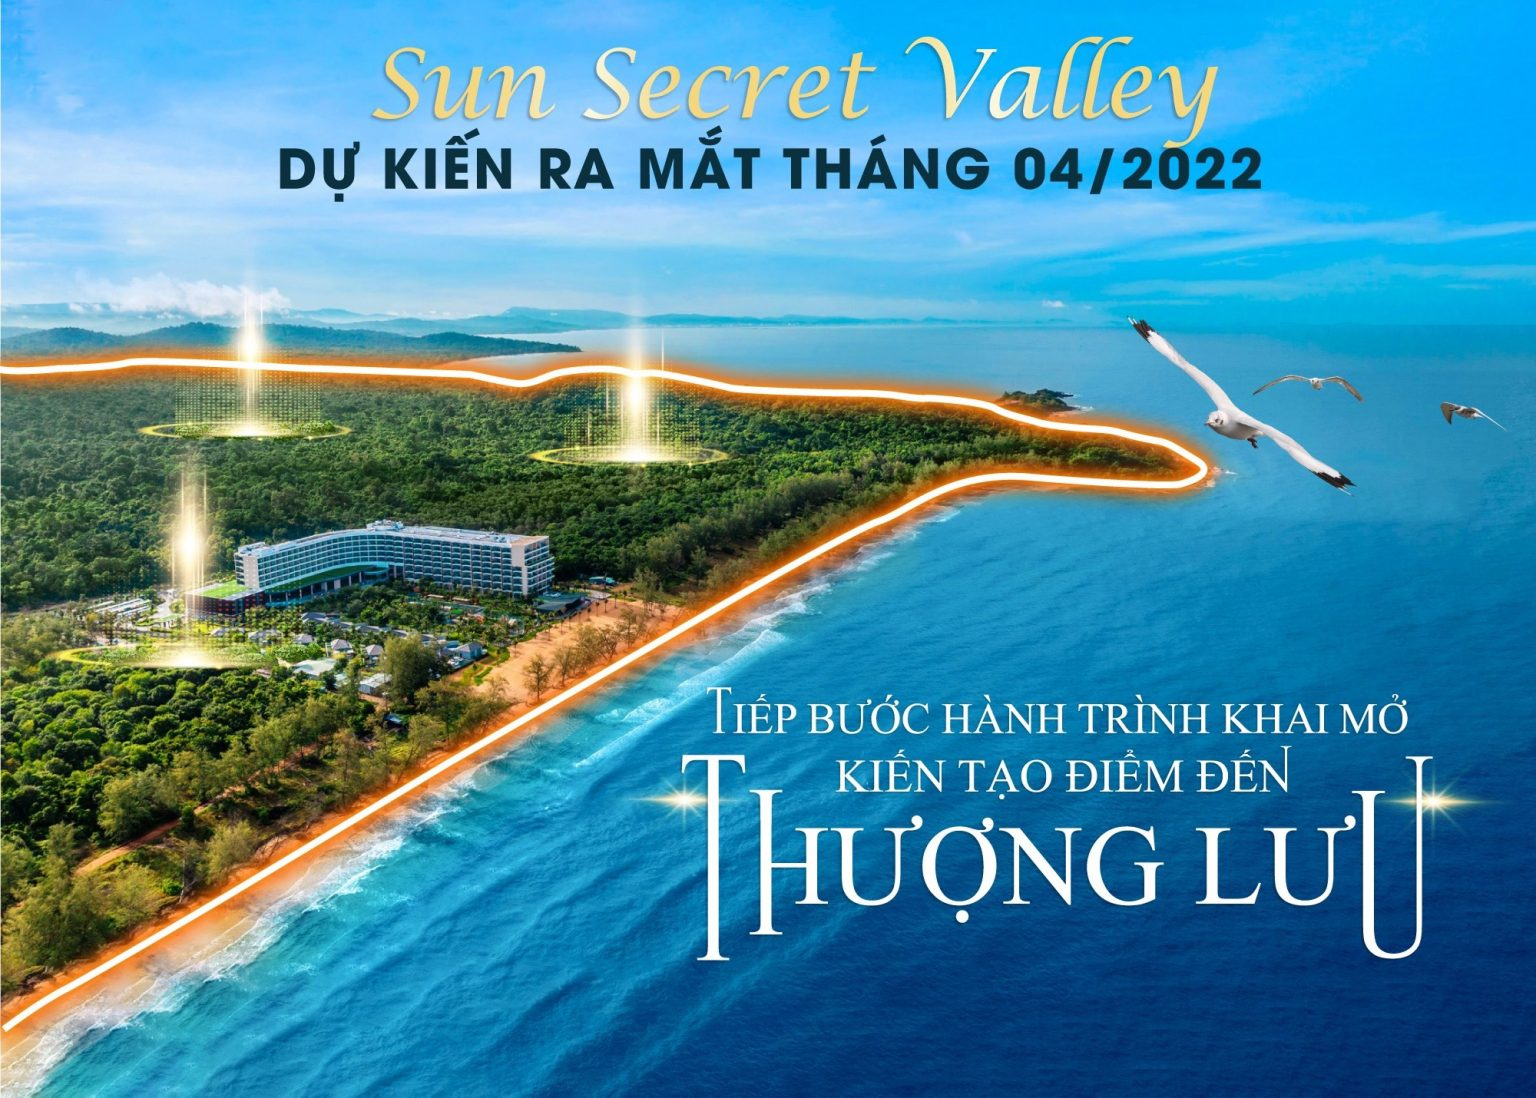 Sun Secret Valley sắp ra mắt